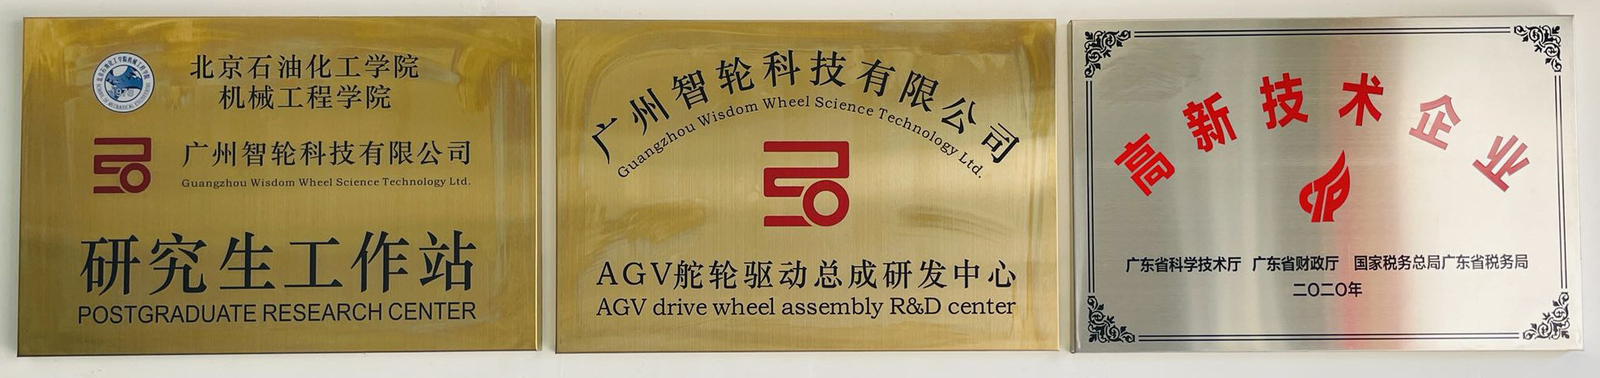 Guangzhou Wisdom Wheel Science Technology Ltd. कारखाना उत्पादन लाइन